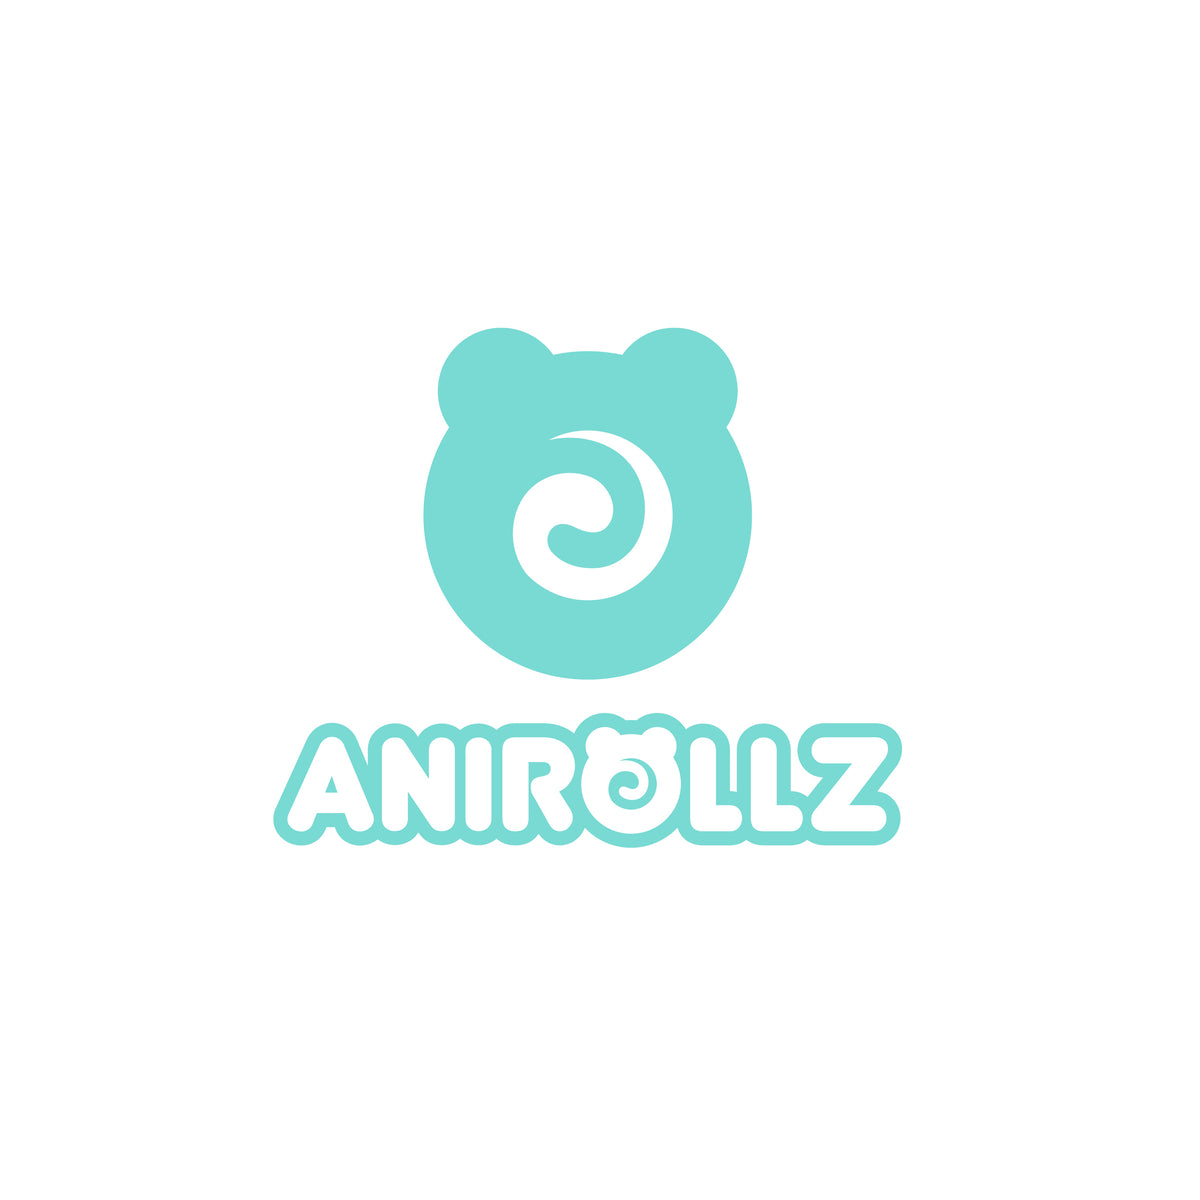 Anirollz | Stuffed Animals & Plush Toys - Warm Up Every Heart